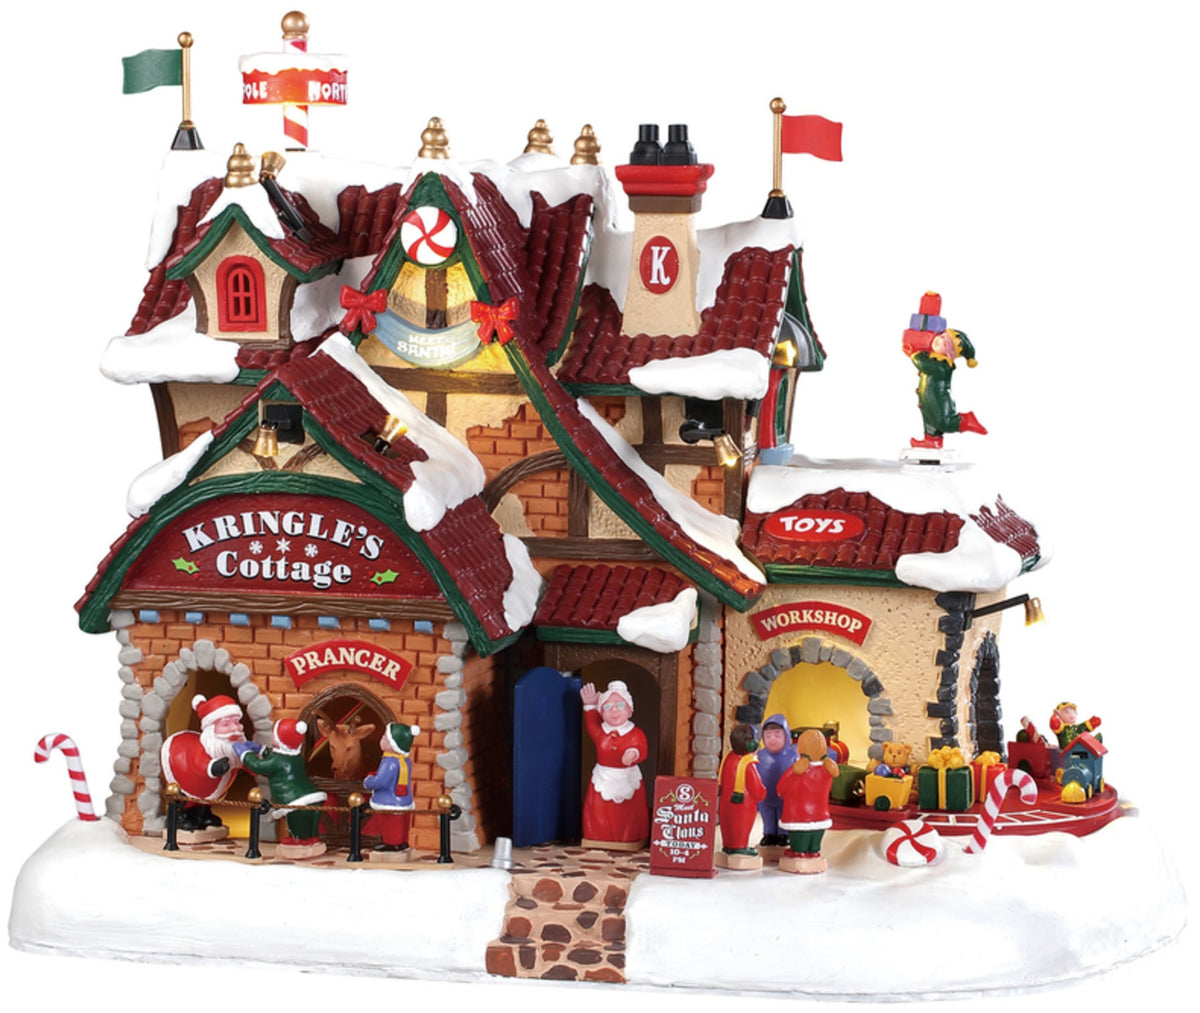 Lemax 95462 Kringle's Cottage Christmas Village Building, Multicolored